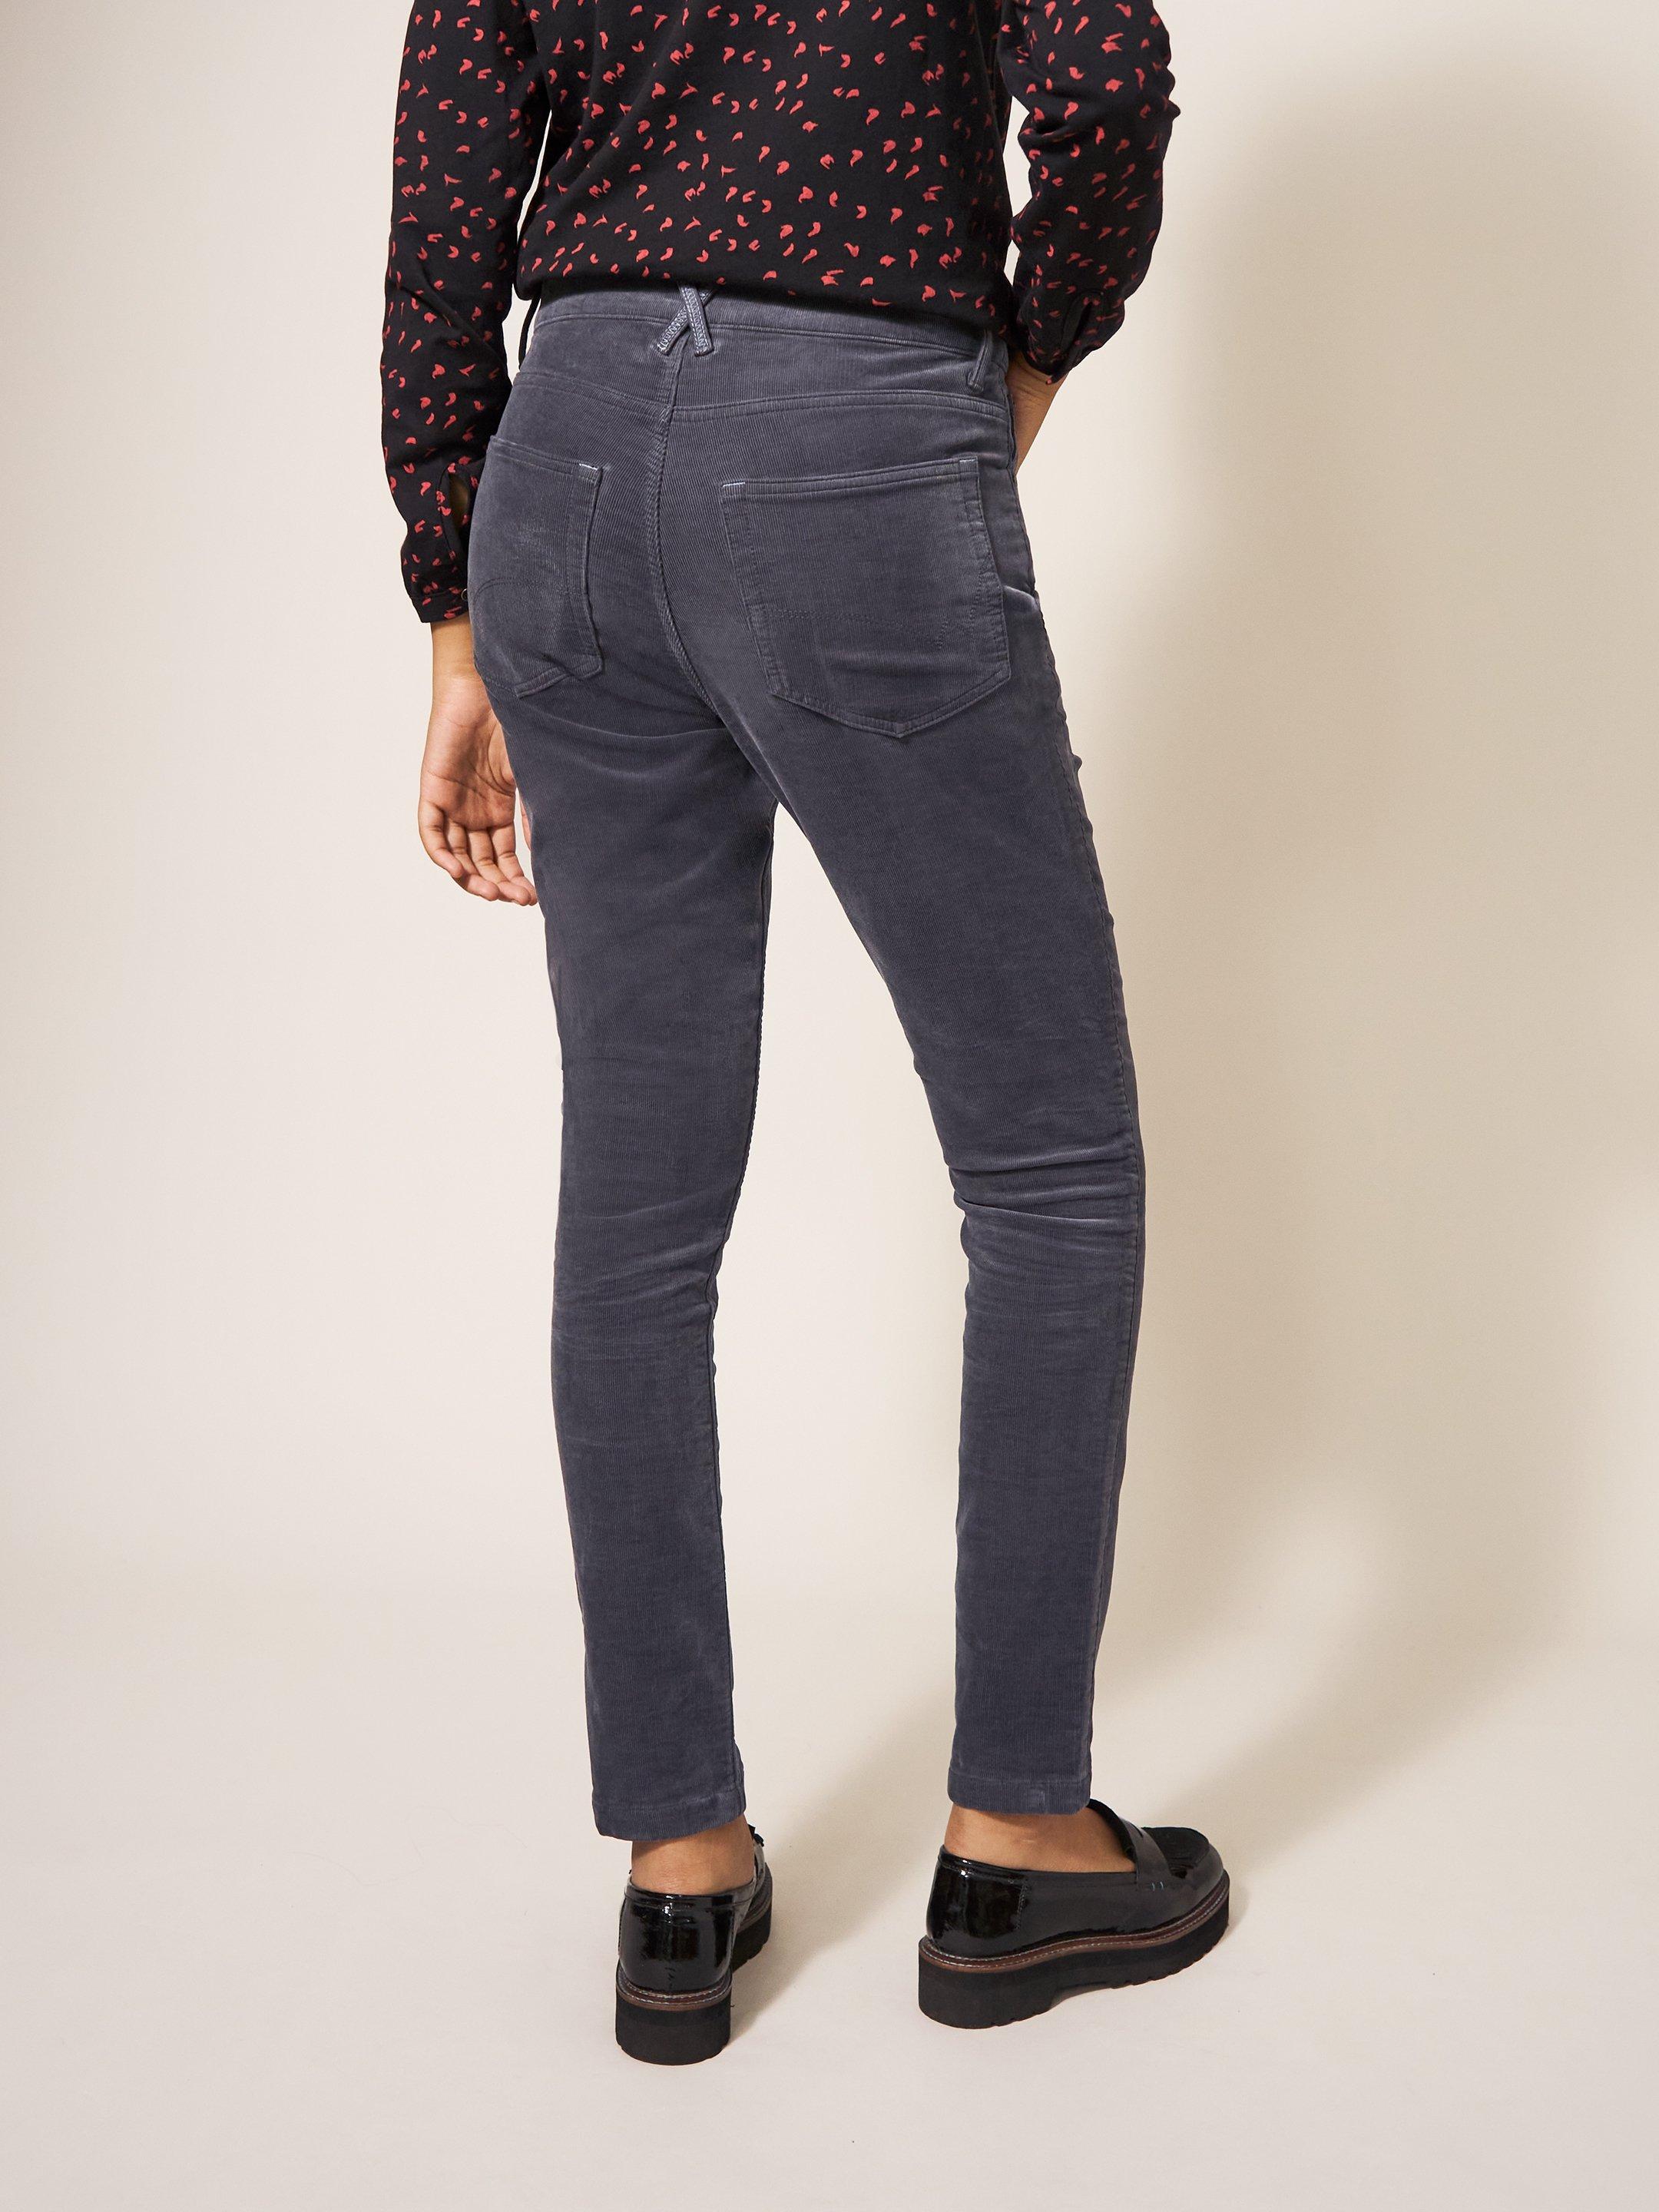 Amelia Skinny Cord Trouser in MID GREY - MODEL BACK